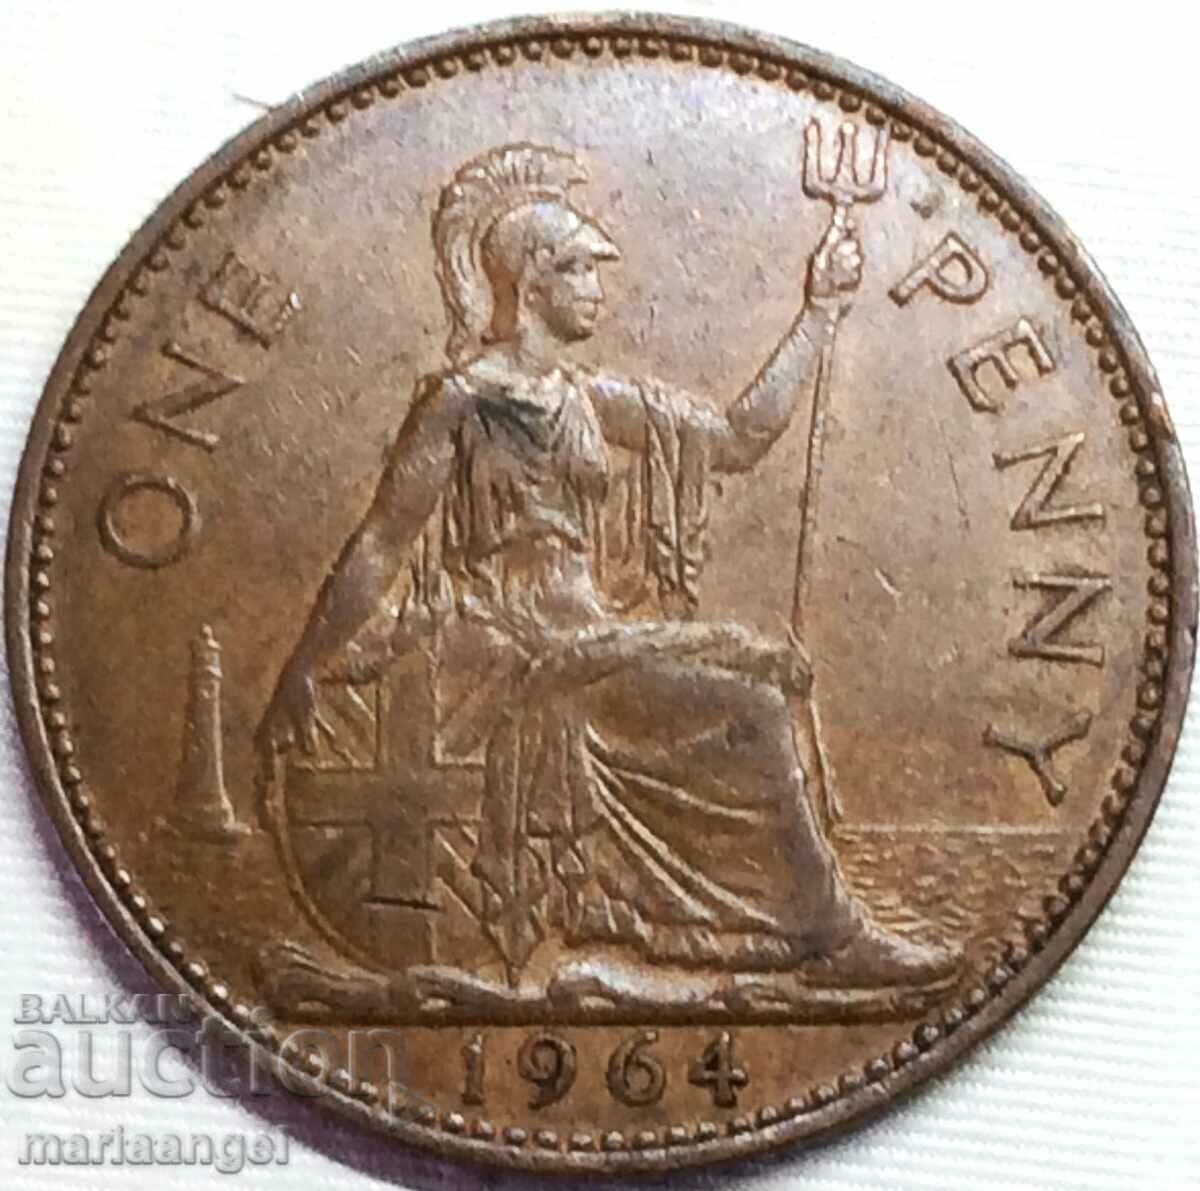 Great Britain 1 Penny 1964 30mm Bronze 2